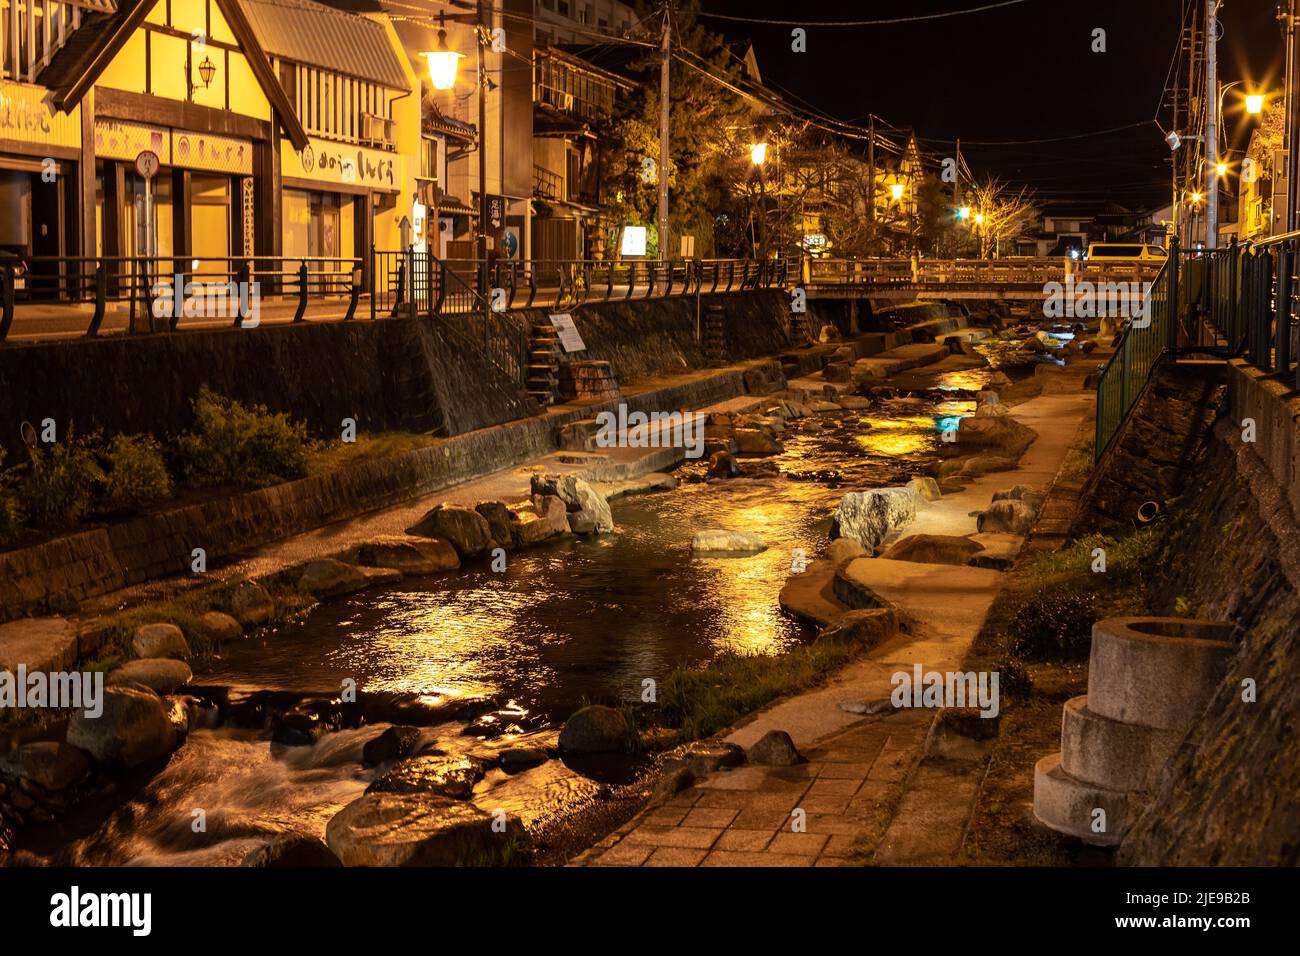 Illuminated Tamatsukuri Onsen cityscape and Tamayugawa River at night. Tamatsukuri town is known as historical hot spring resort in Matsue. Stock Photo